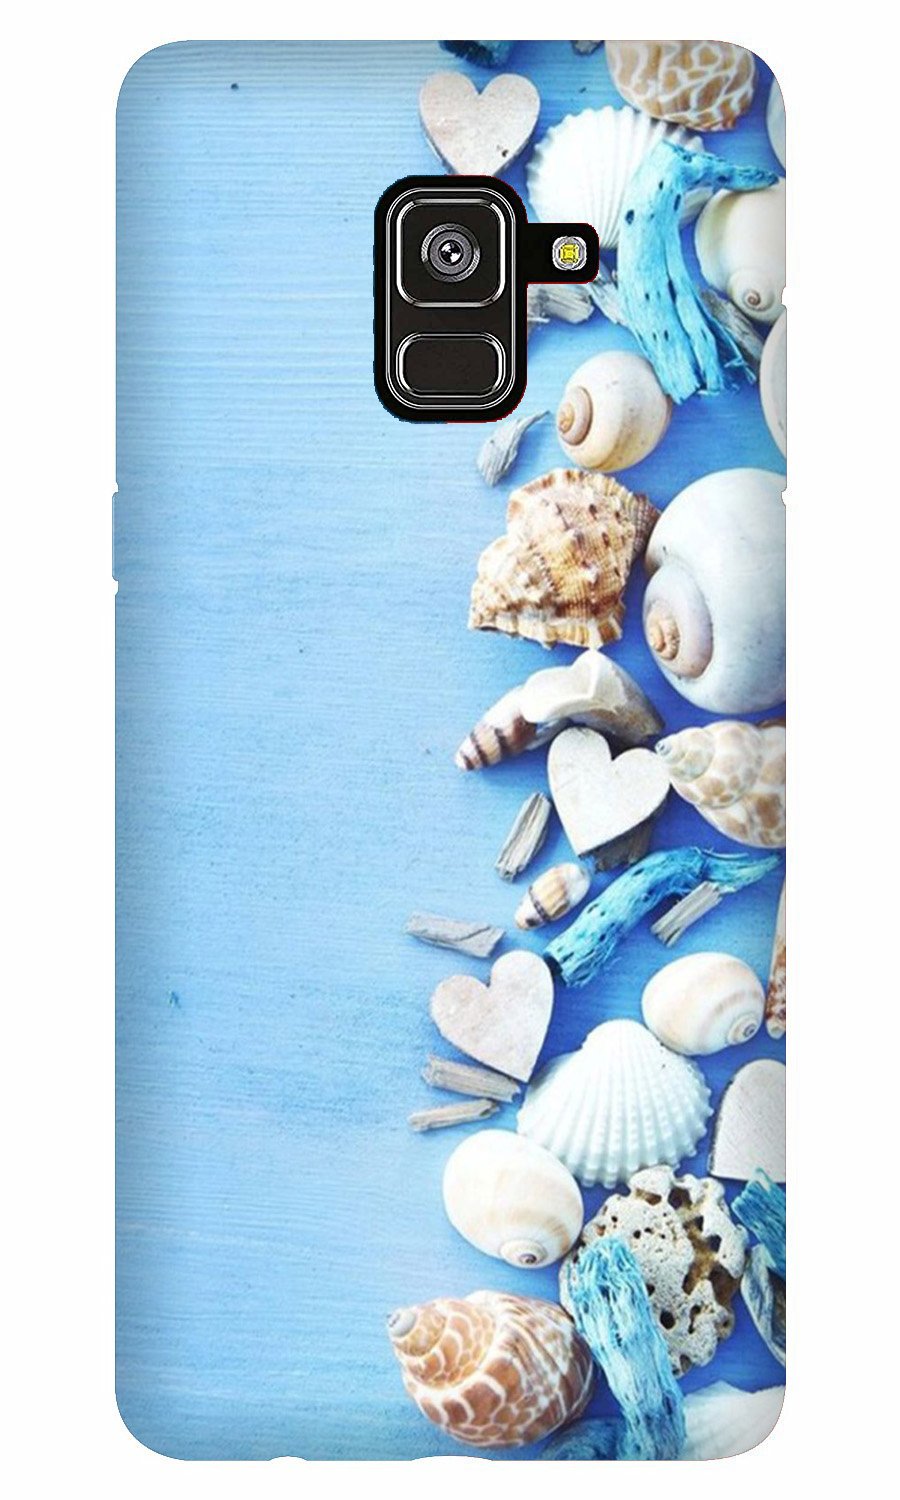 Sea Shells2 Case for Galaxy A5 (2018)